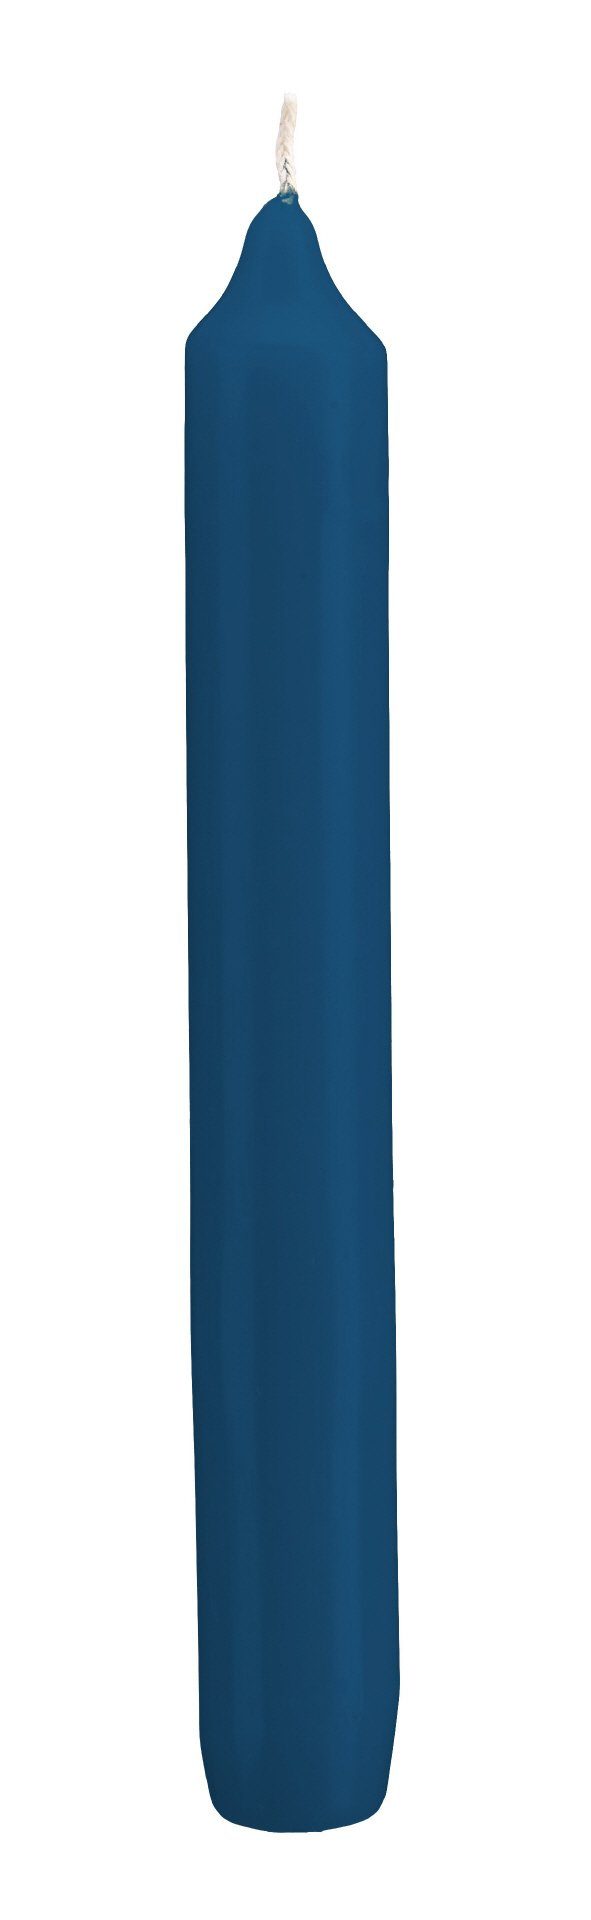 Kopschitz Kerzen Tafelkerze Leuchterkerzen Petrol Blau 250 x Ø 25 mm, 12 Stück